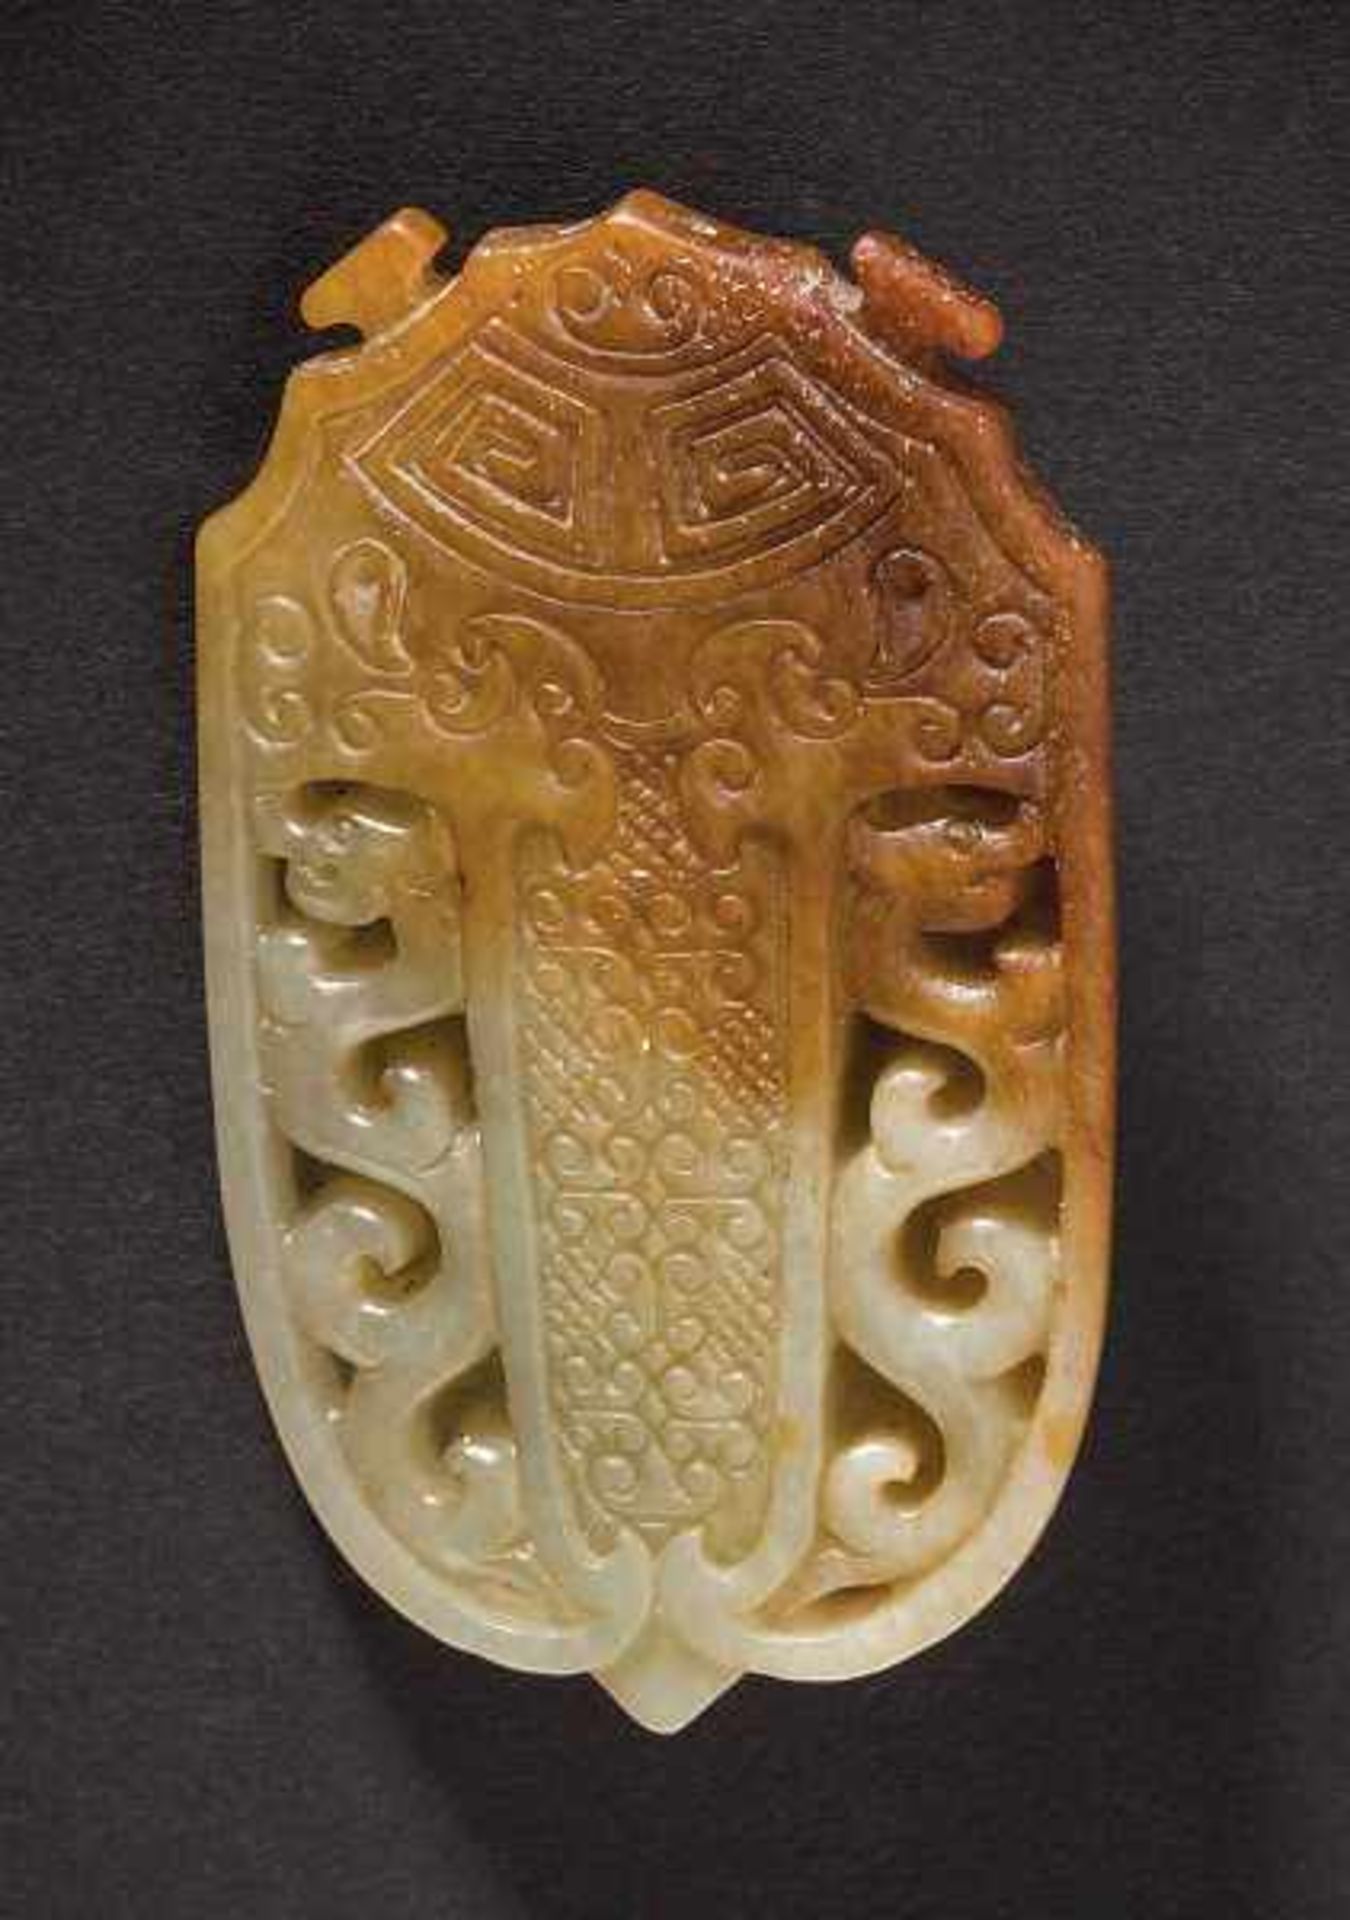 A Jade Cicada with Chi Dragon Design, Han Dynasty 漢代螭龍紋玉蟬 Width 4.9 cm, height 8.4 cm. 寬 4.9 cm, 高